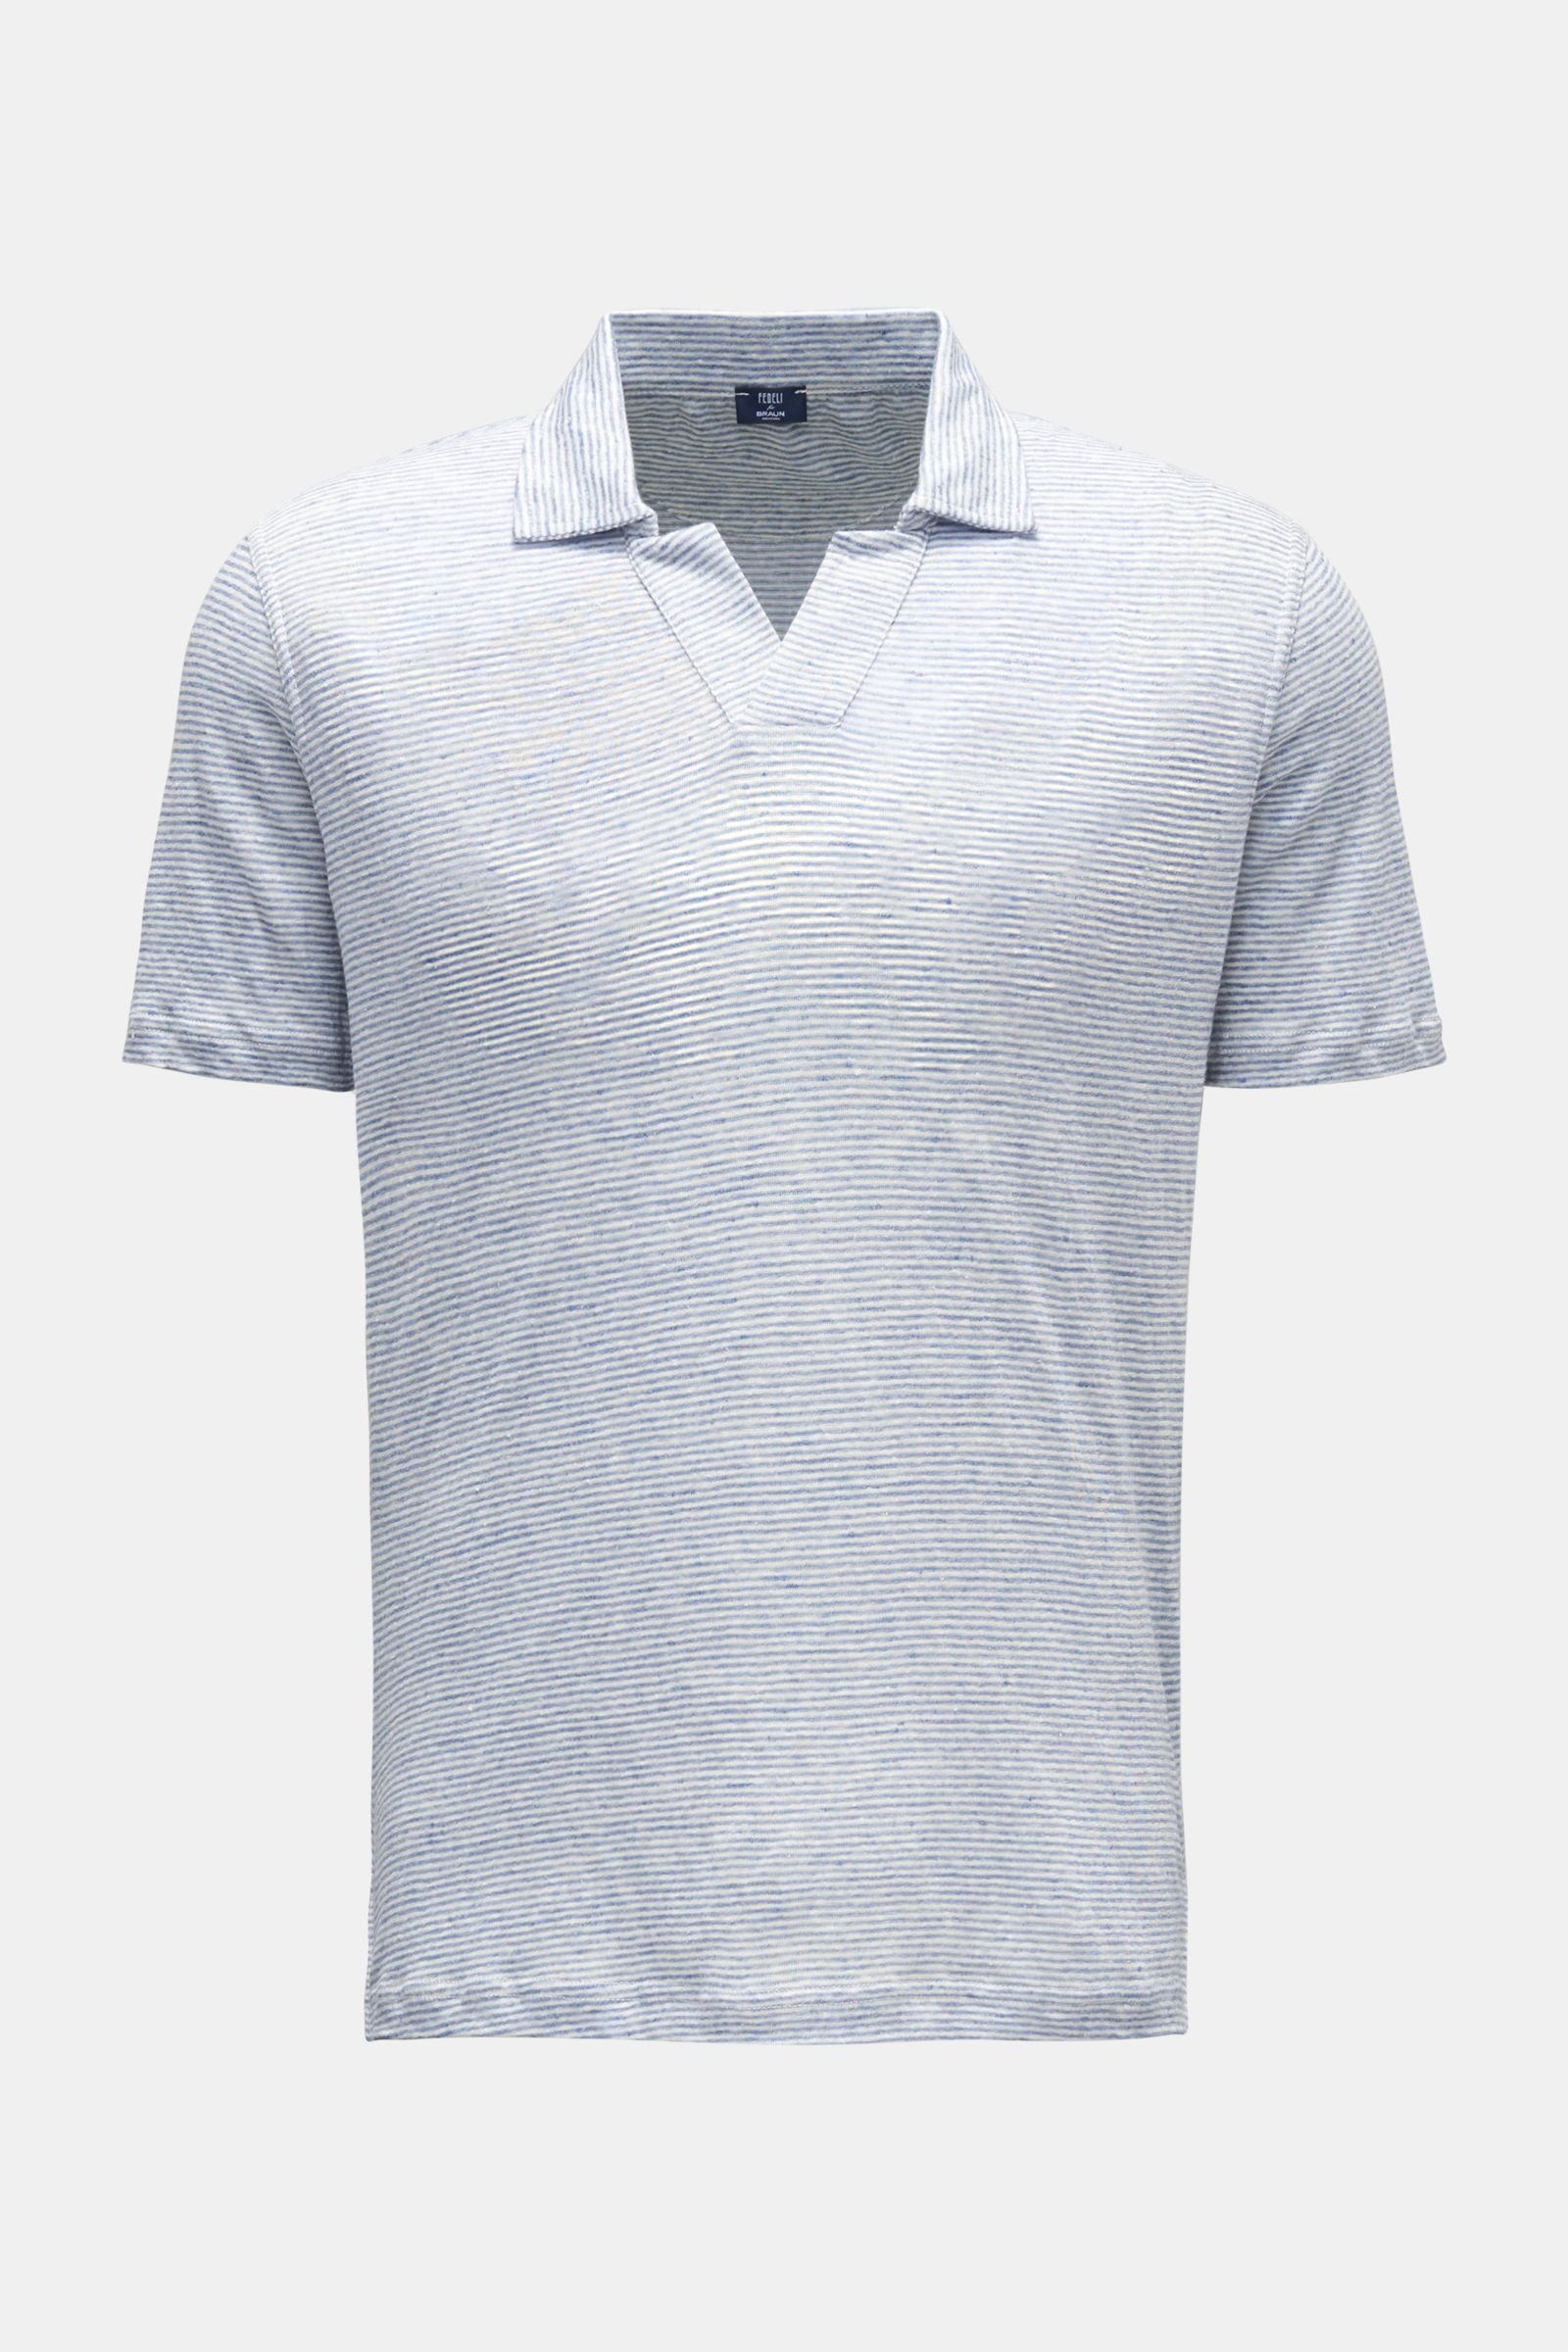 Leinen-Poloshirt 'Franky' rauchblau/weiß gestreift